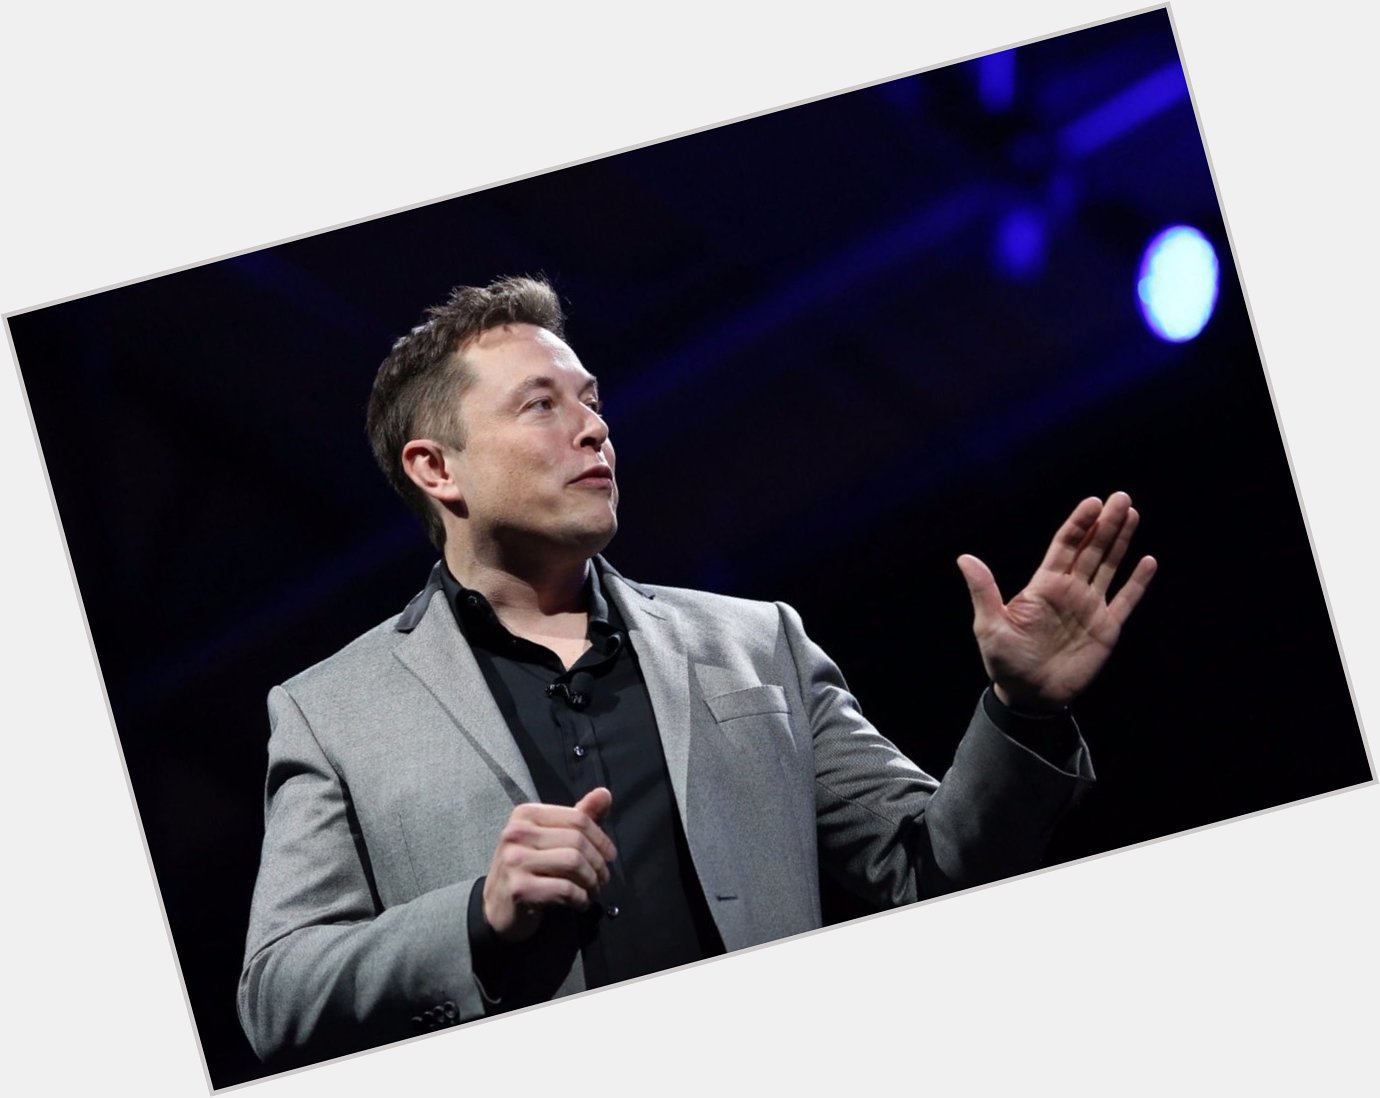 Happy birthday Elon Musk...
U r my inspiration always...   